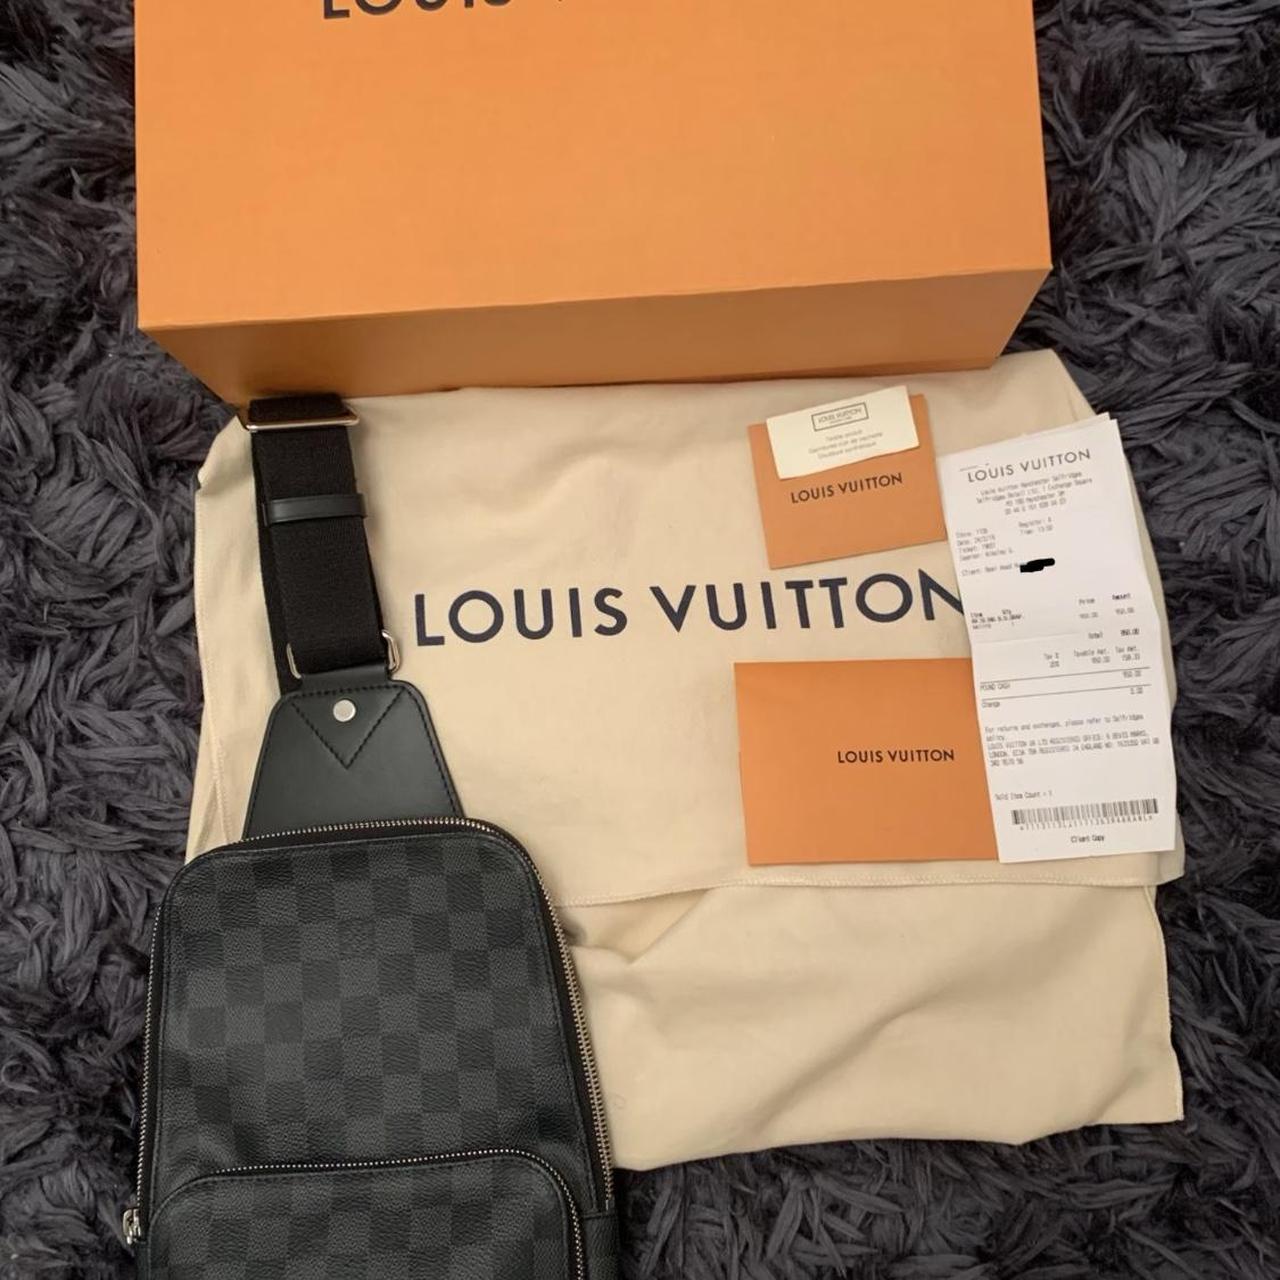 ️ Louis Vuitton sling Avenue ️ great condition worn... - Depop